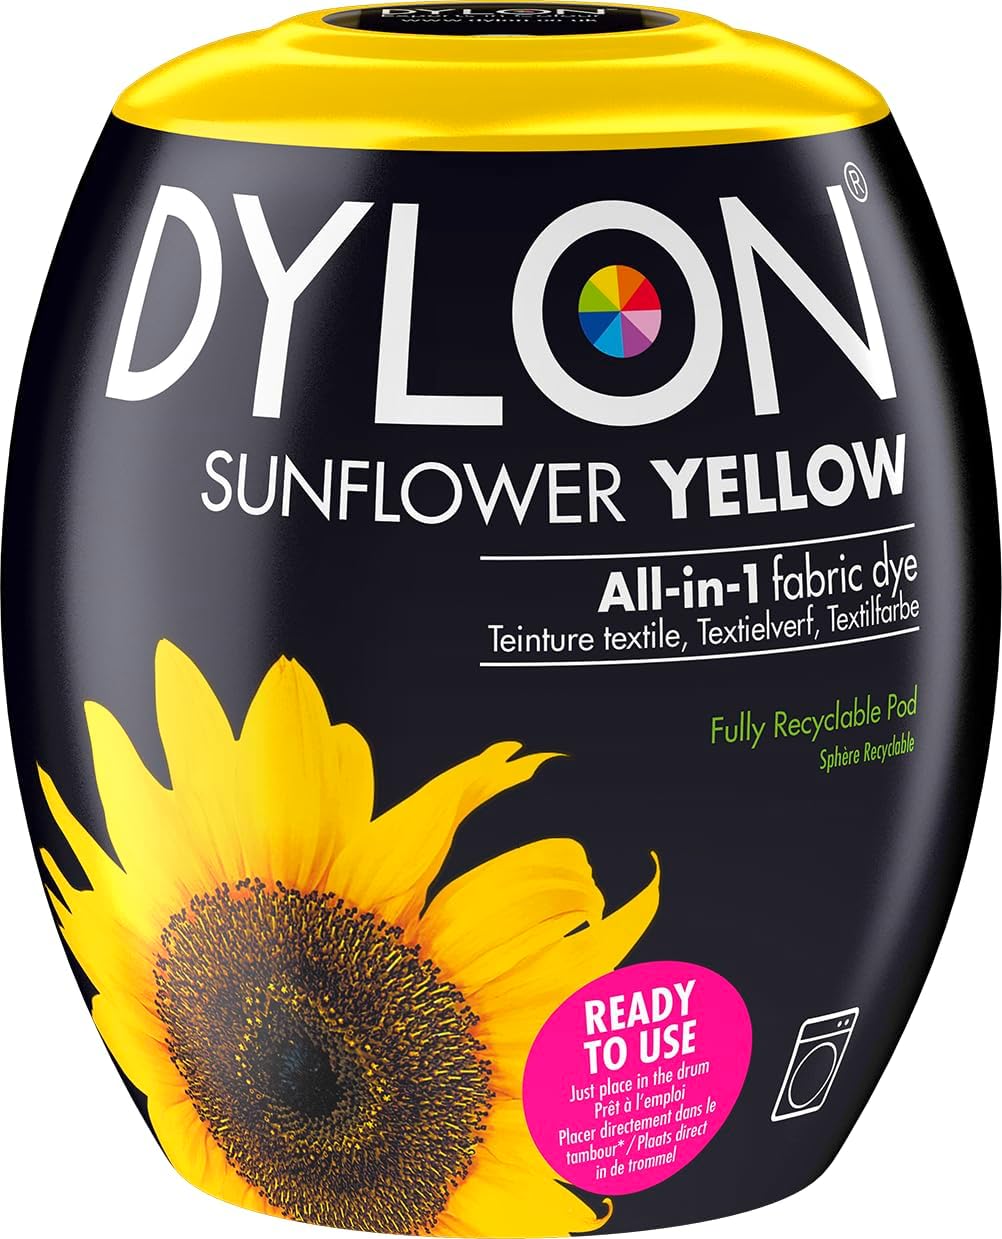 Dylon Machine Dye Pod Sunflower Yellow - 350g